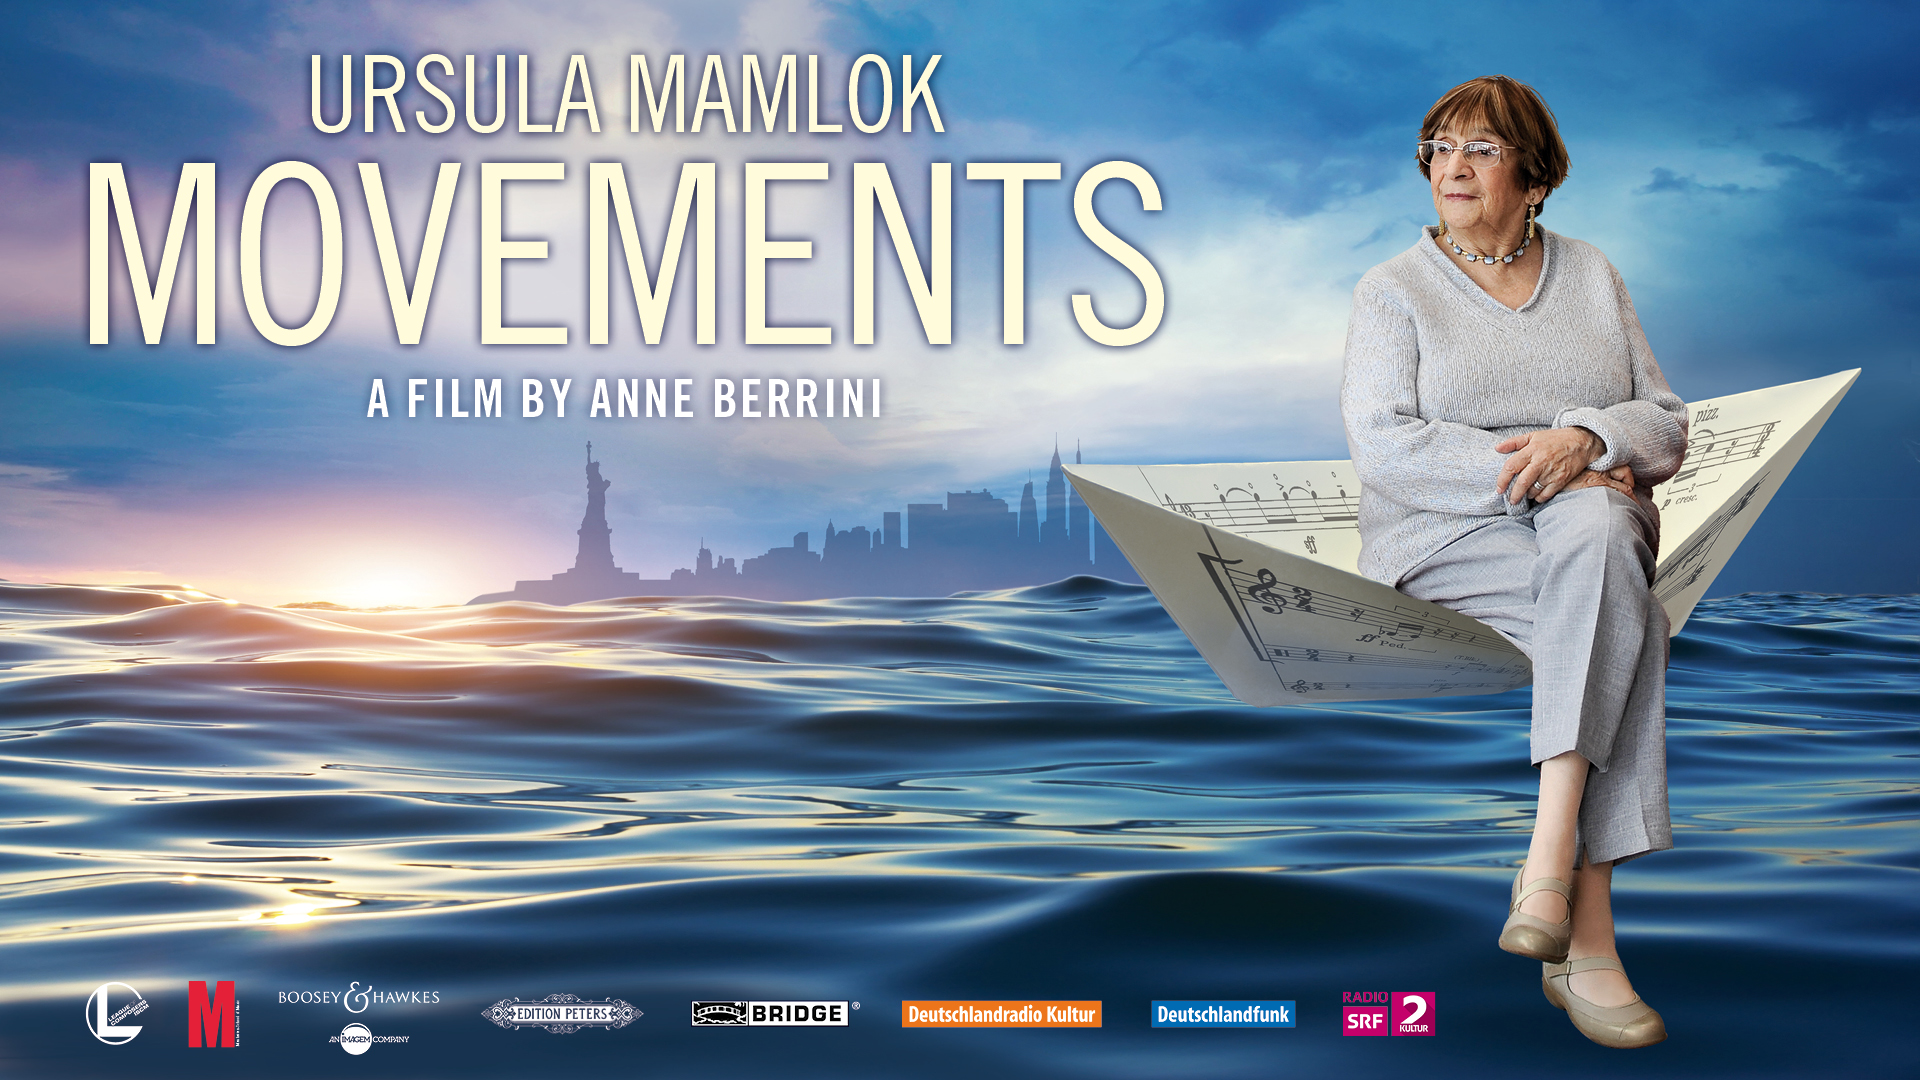 Ursula Mamlok Movement Film by Anne Berrini